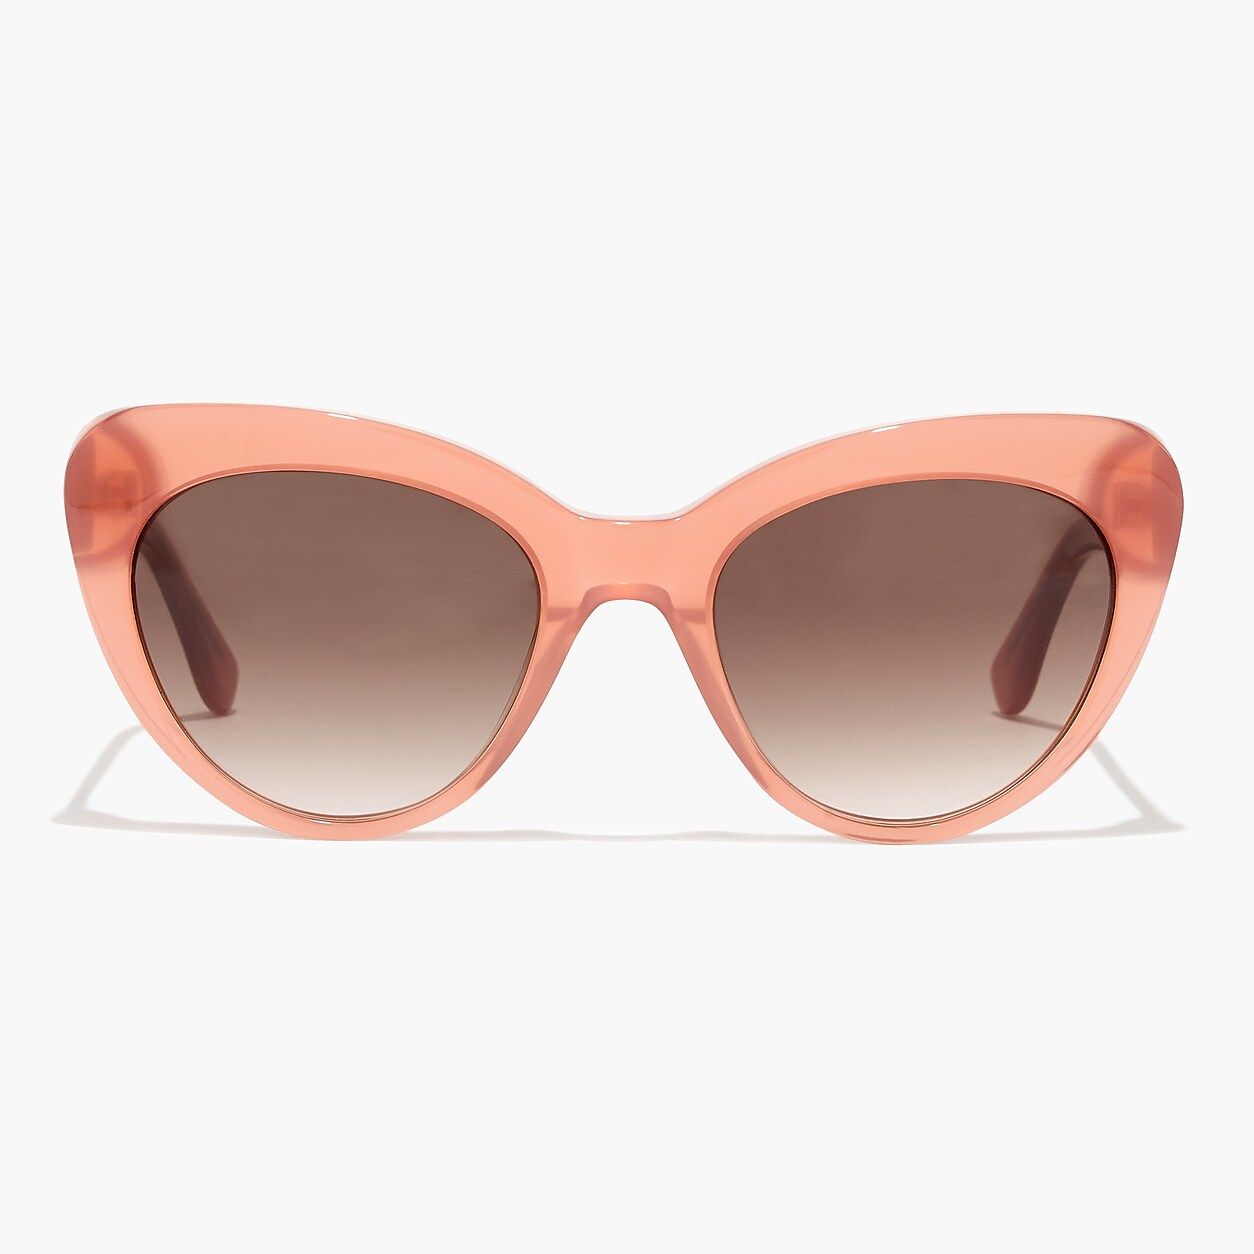 Veranda cateye sunglasses | J.Crew UK